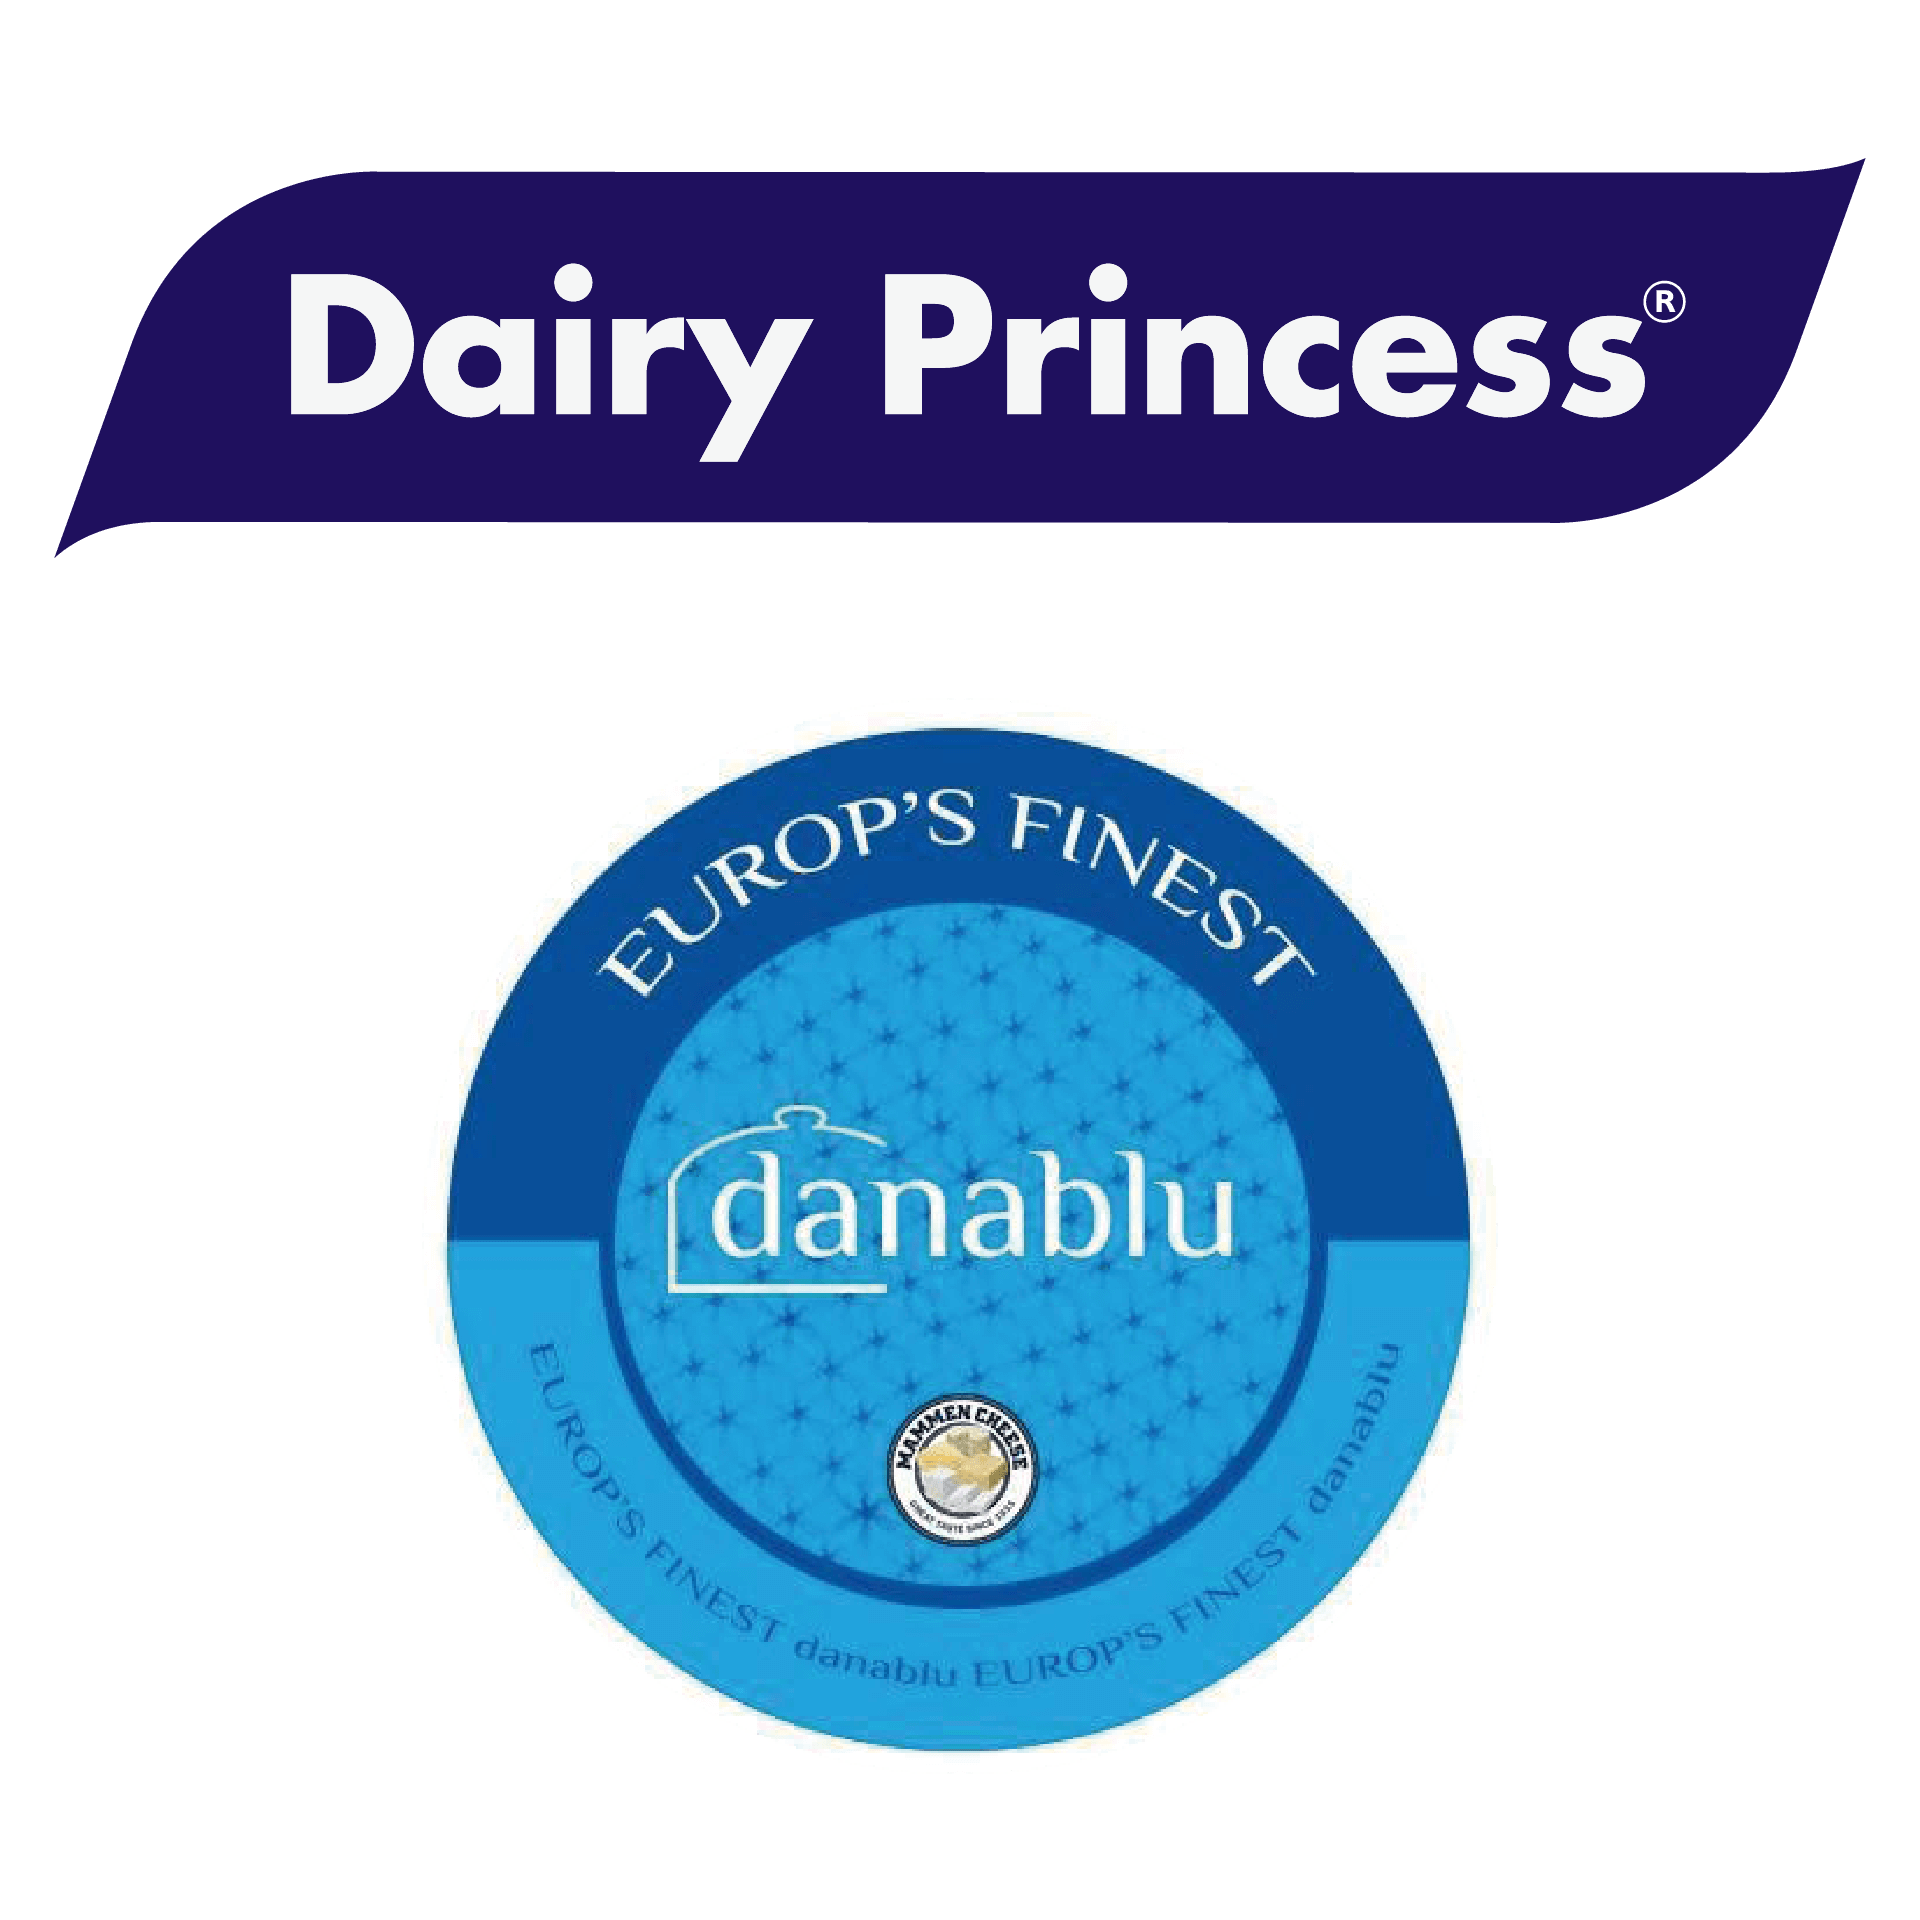 Dairy Princess 乳品公主天然起司片 & Eroupe's Finest EF丹麥藍乾酪